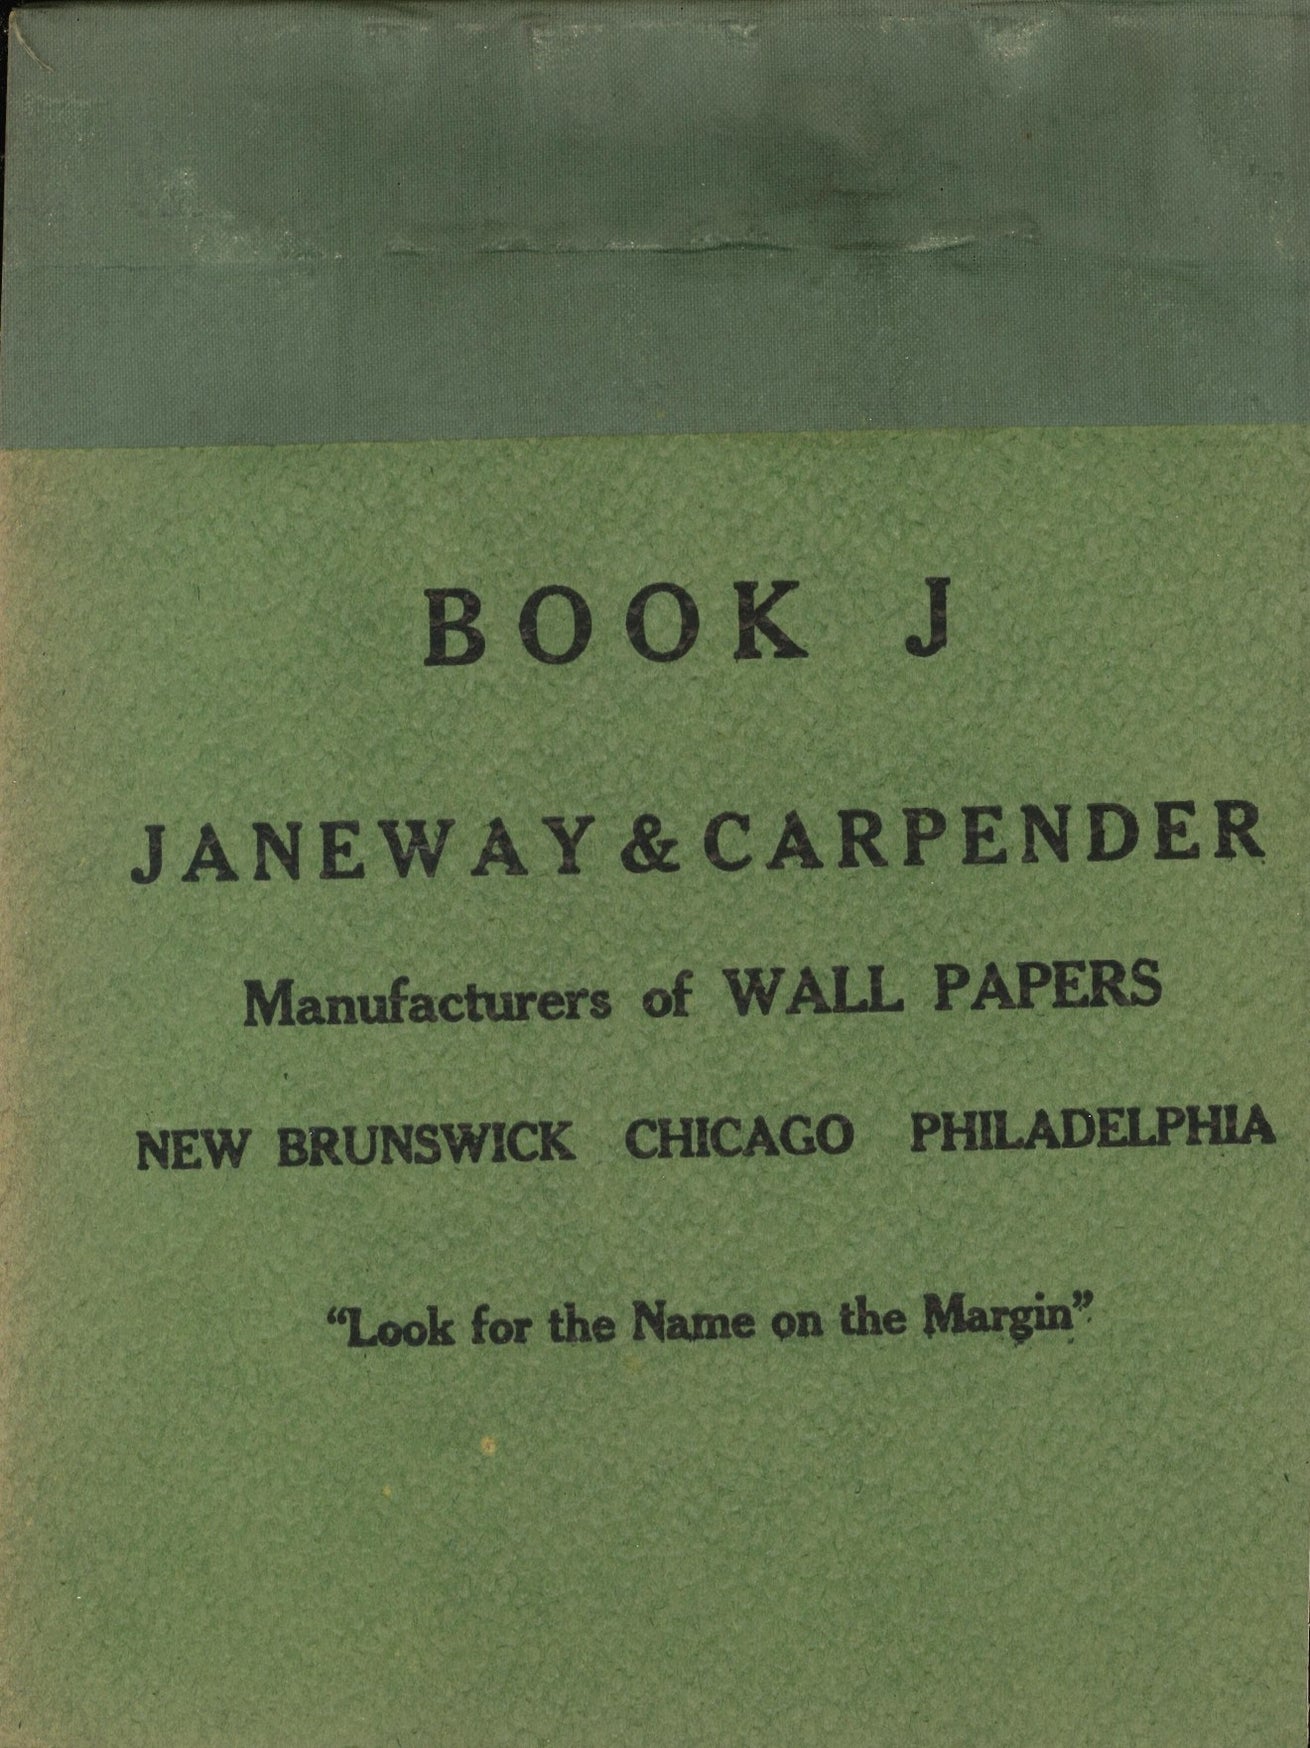 1910s Janeway & Carpender Book J Borders, Manufacturer